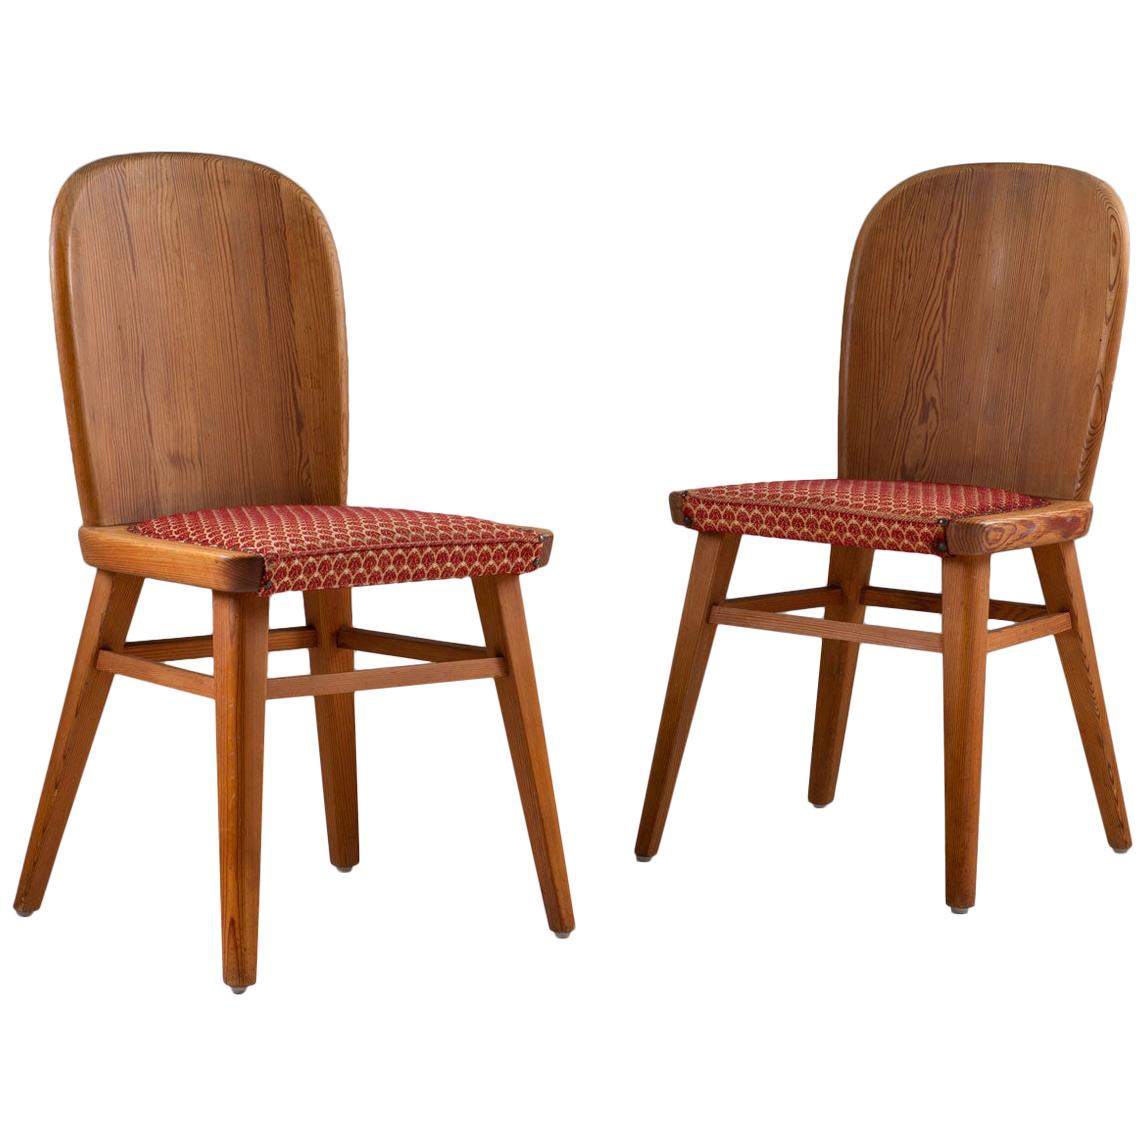 Pair of Scandinavian Chairs in Pine